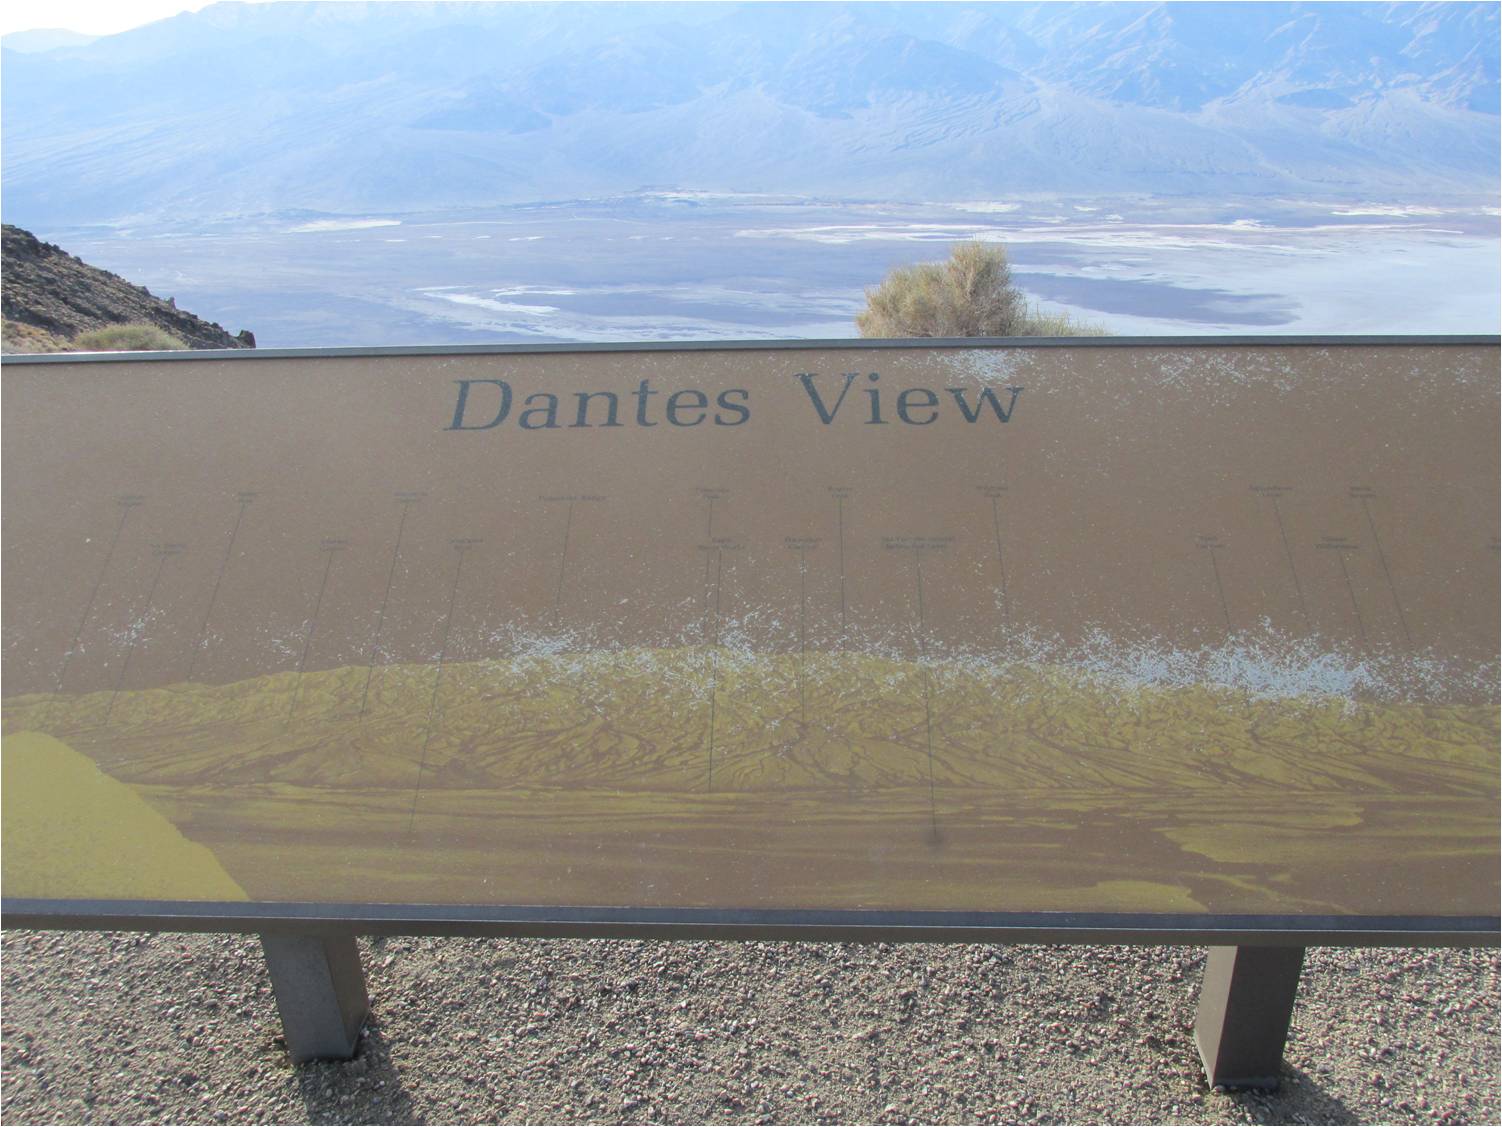 Dantes view i.jpg